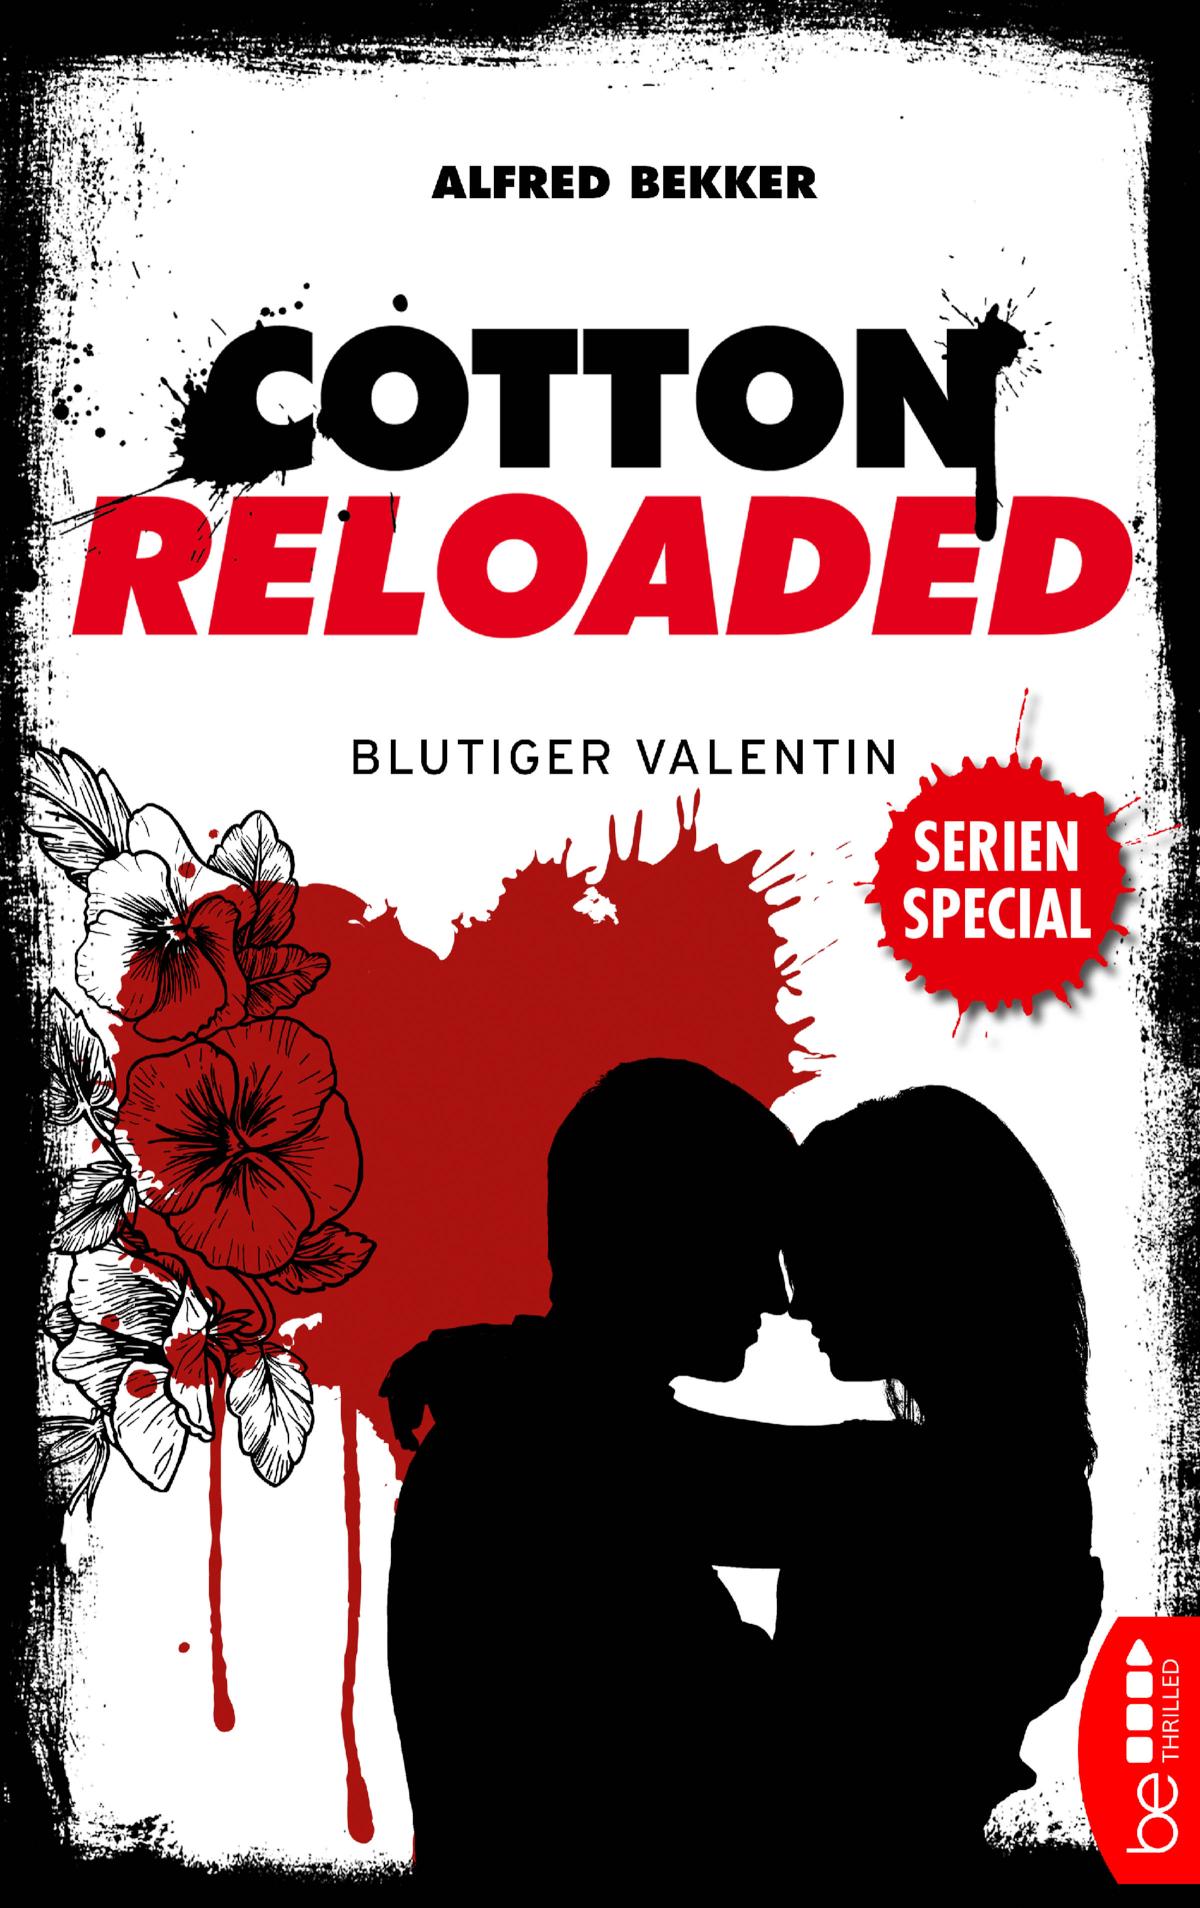 Cotton Reloaded: Blutiger Valentin Serienspecial